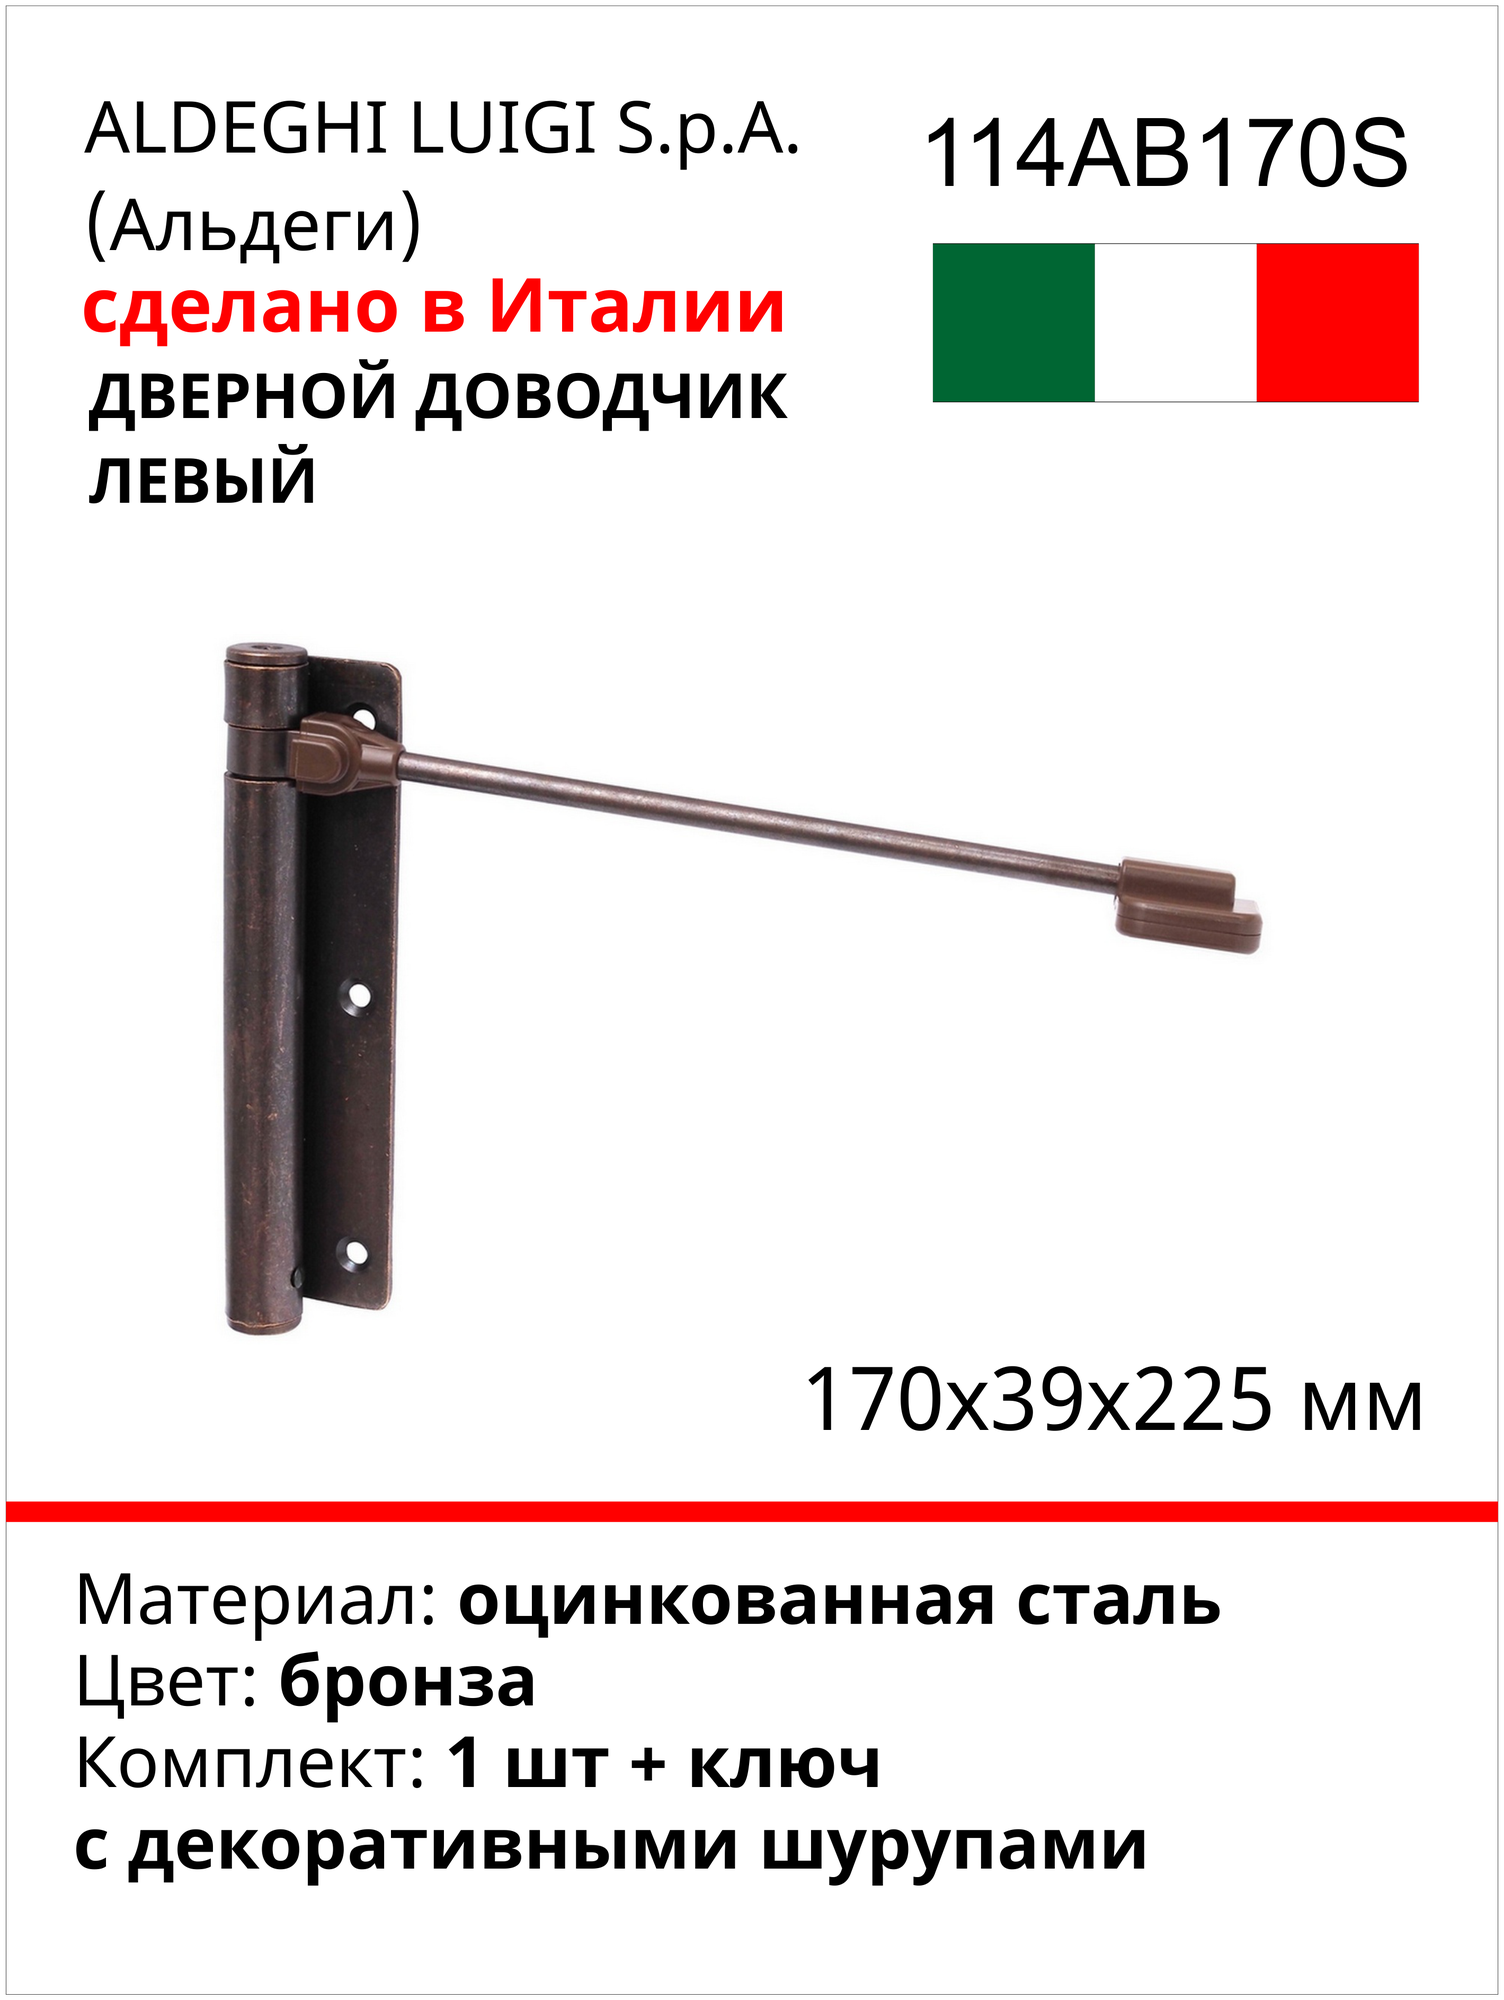 Дверной доводчик ALDEGHI LUIGI SPA левый, 170х39х225 мм, цвет: бронза, к-т: 1 шт + ключ с декоративными шурупами 114AB170S